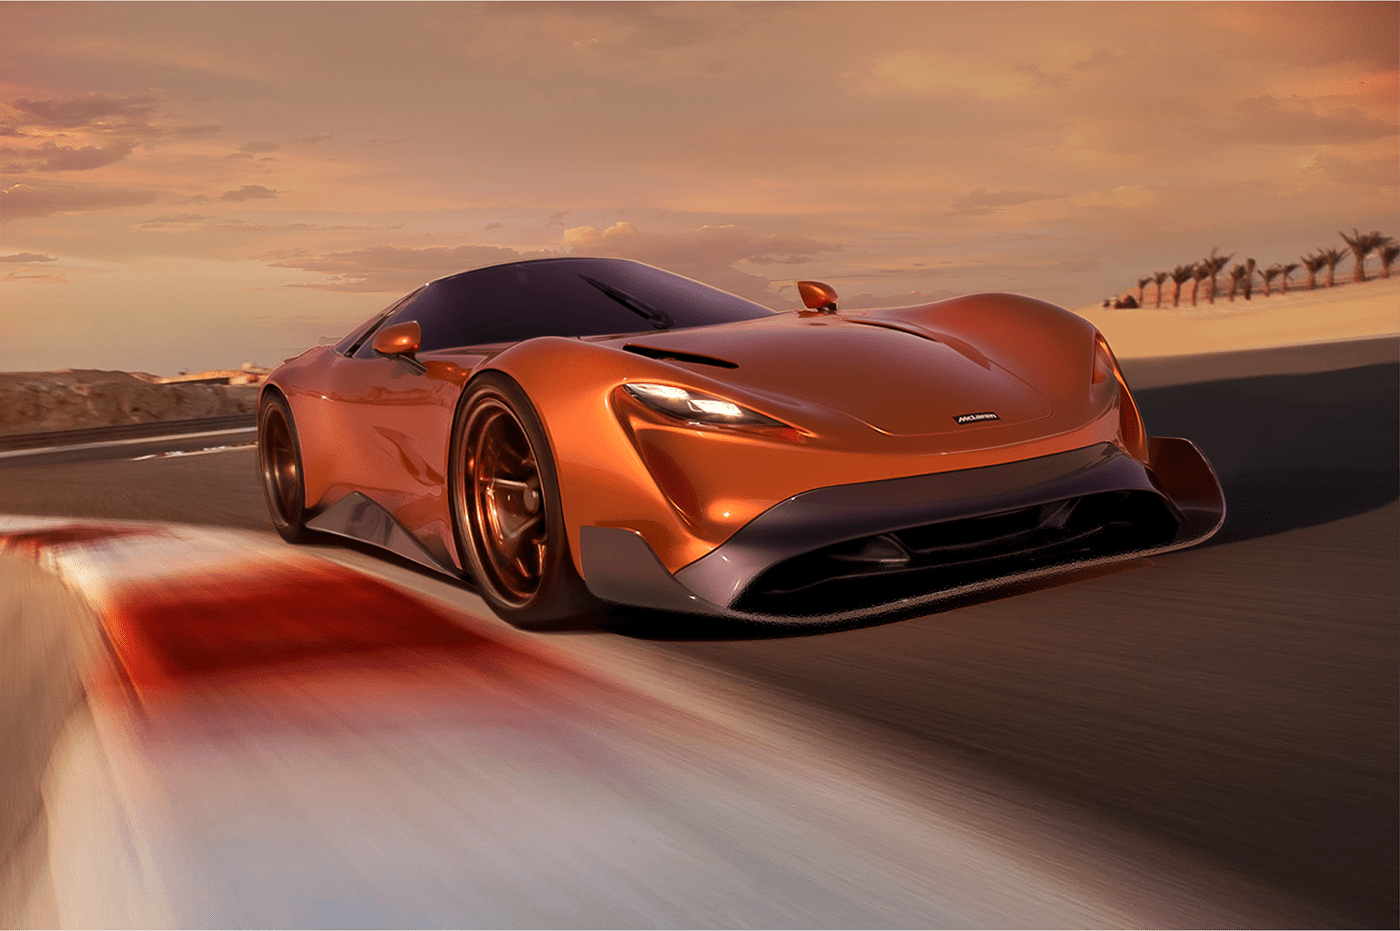 supercar concept automotive   McLaren car design sketch Render 3D Alias Racing